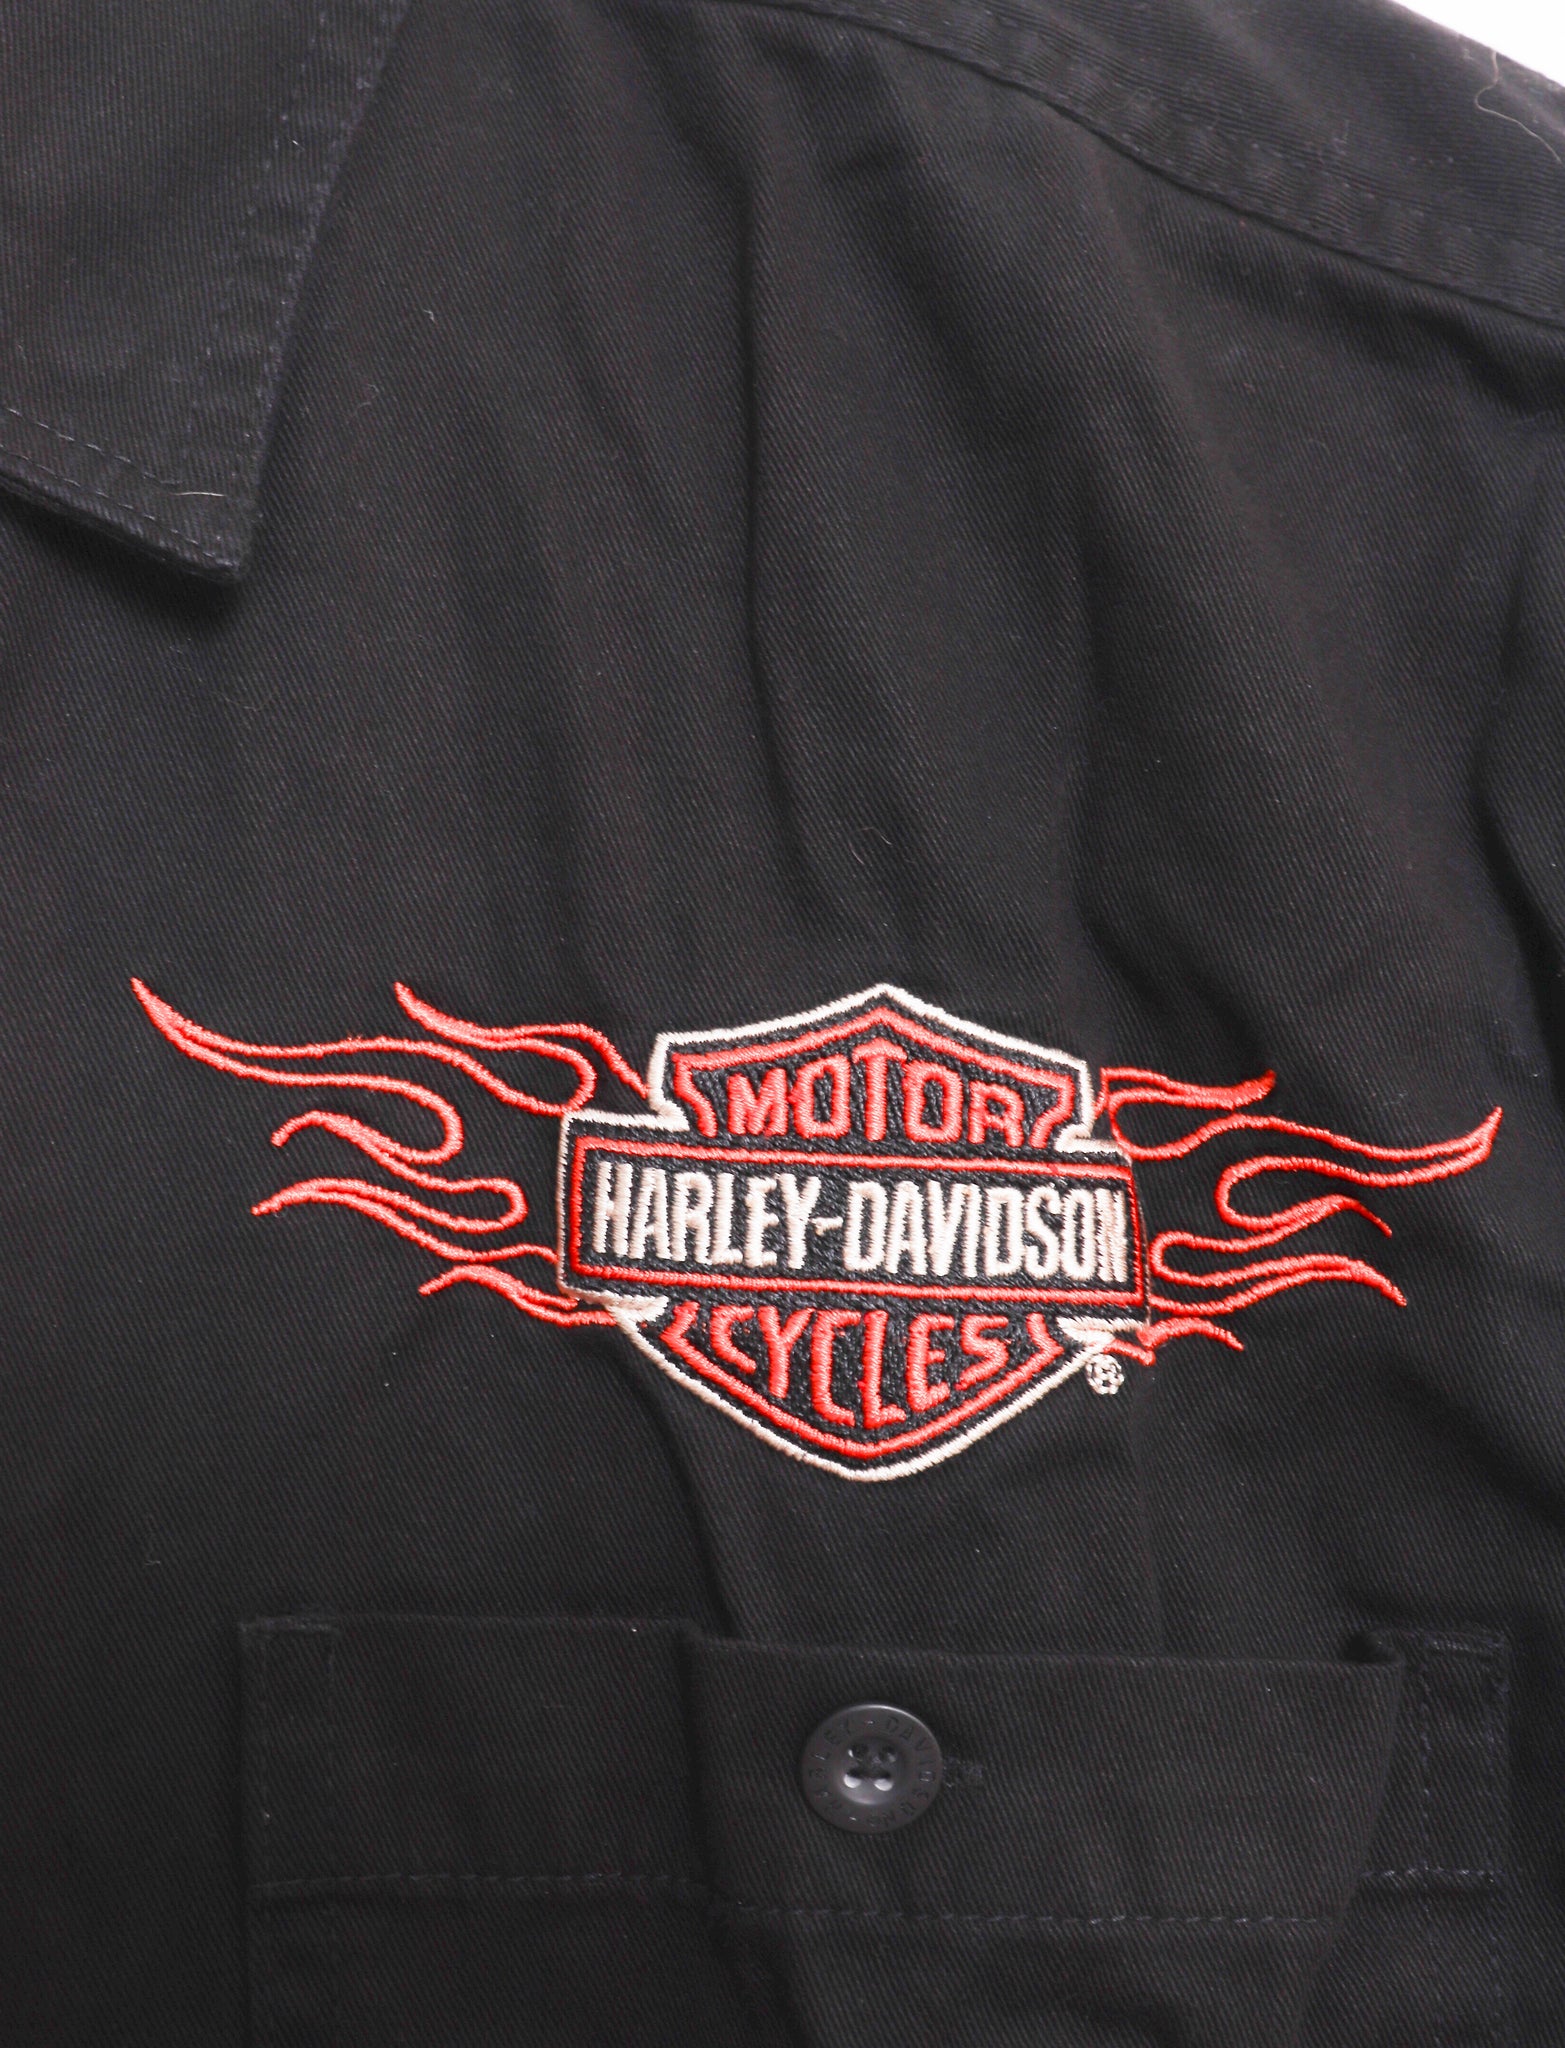 Harley Davidson Denim Black Vest